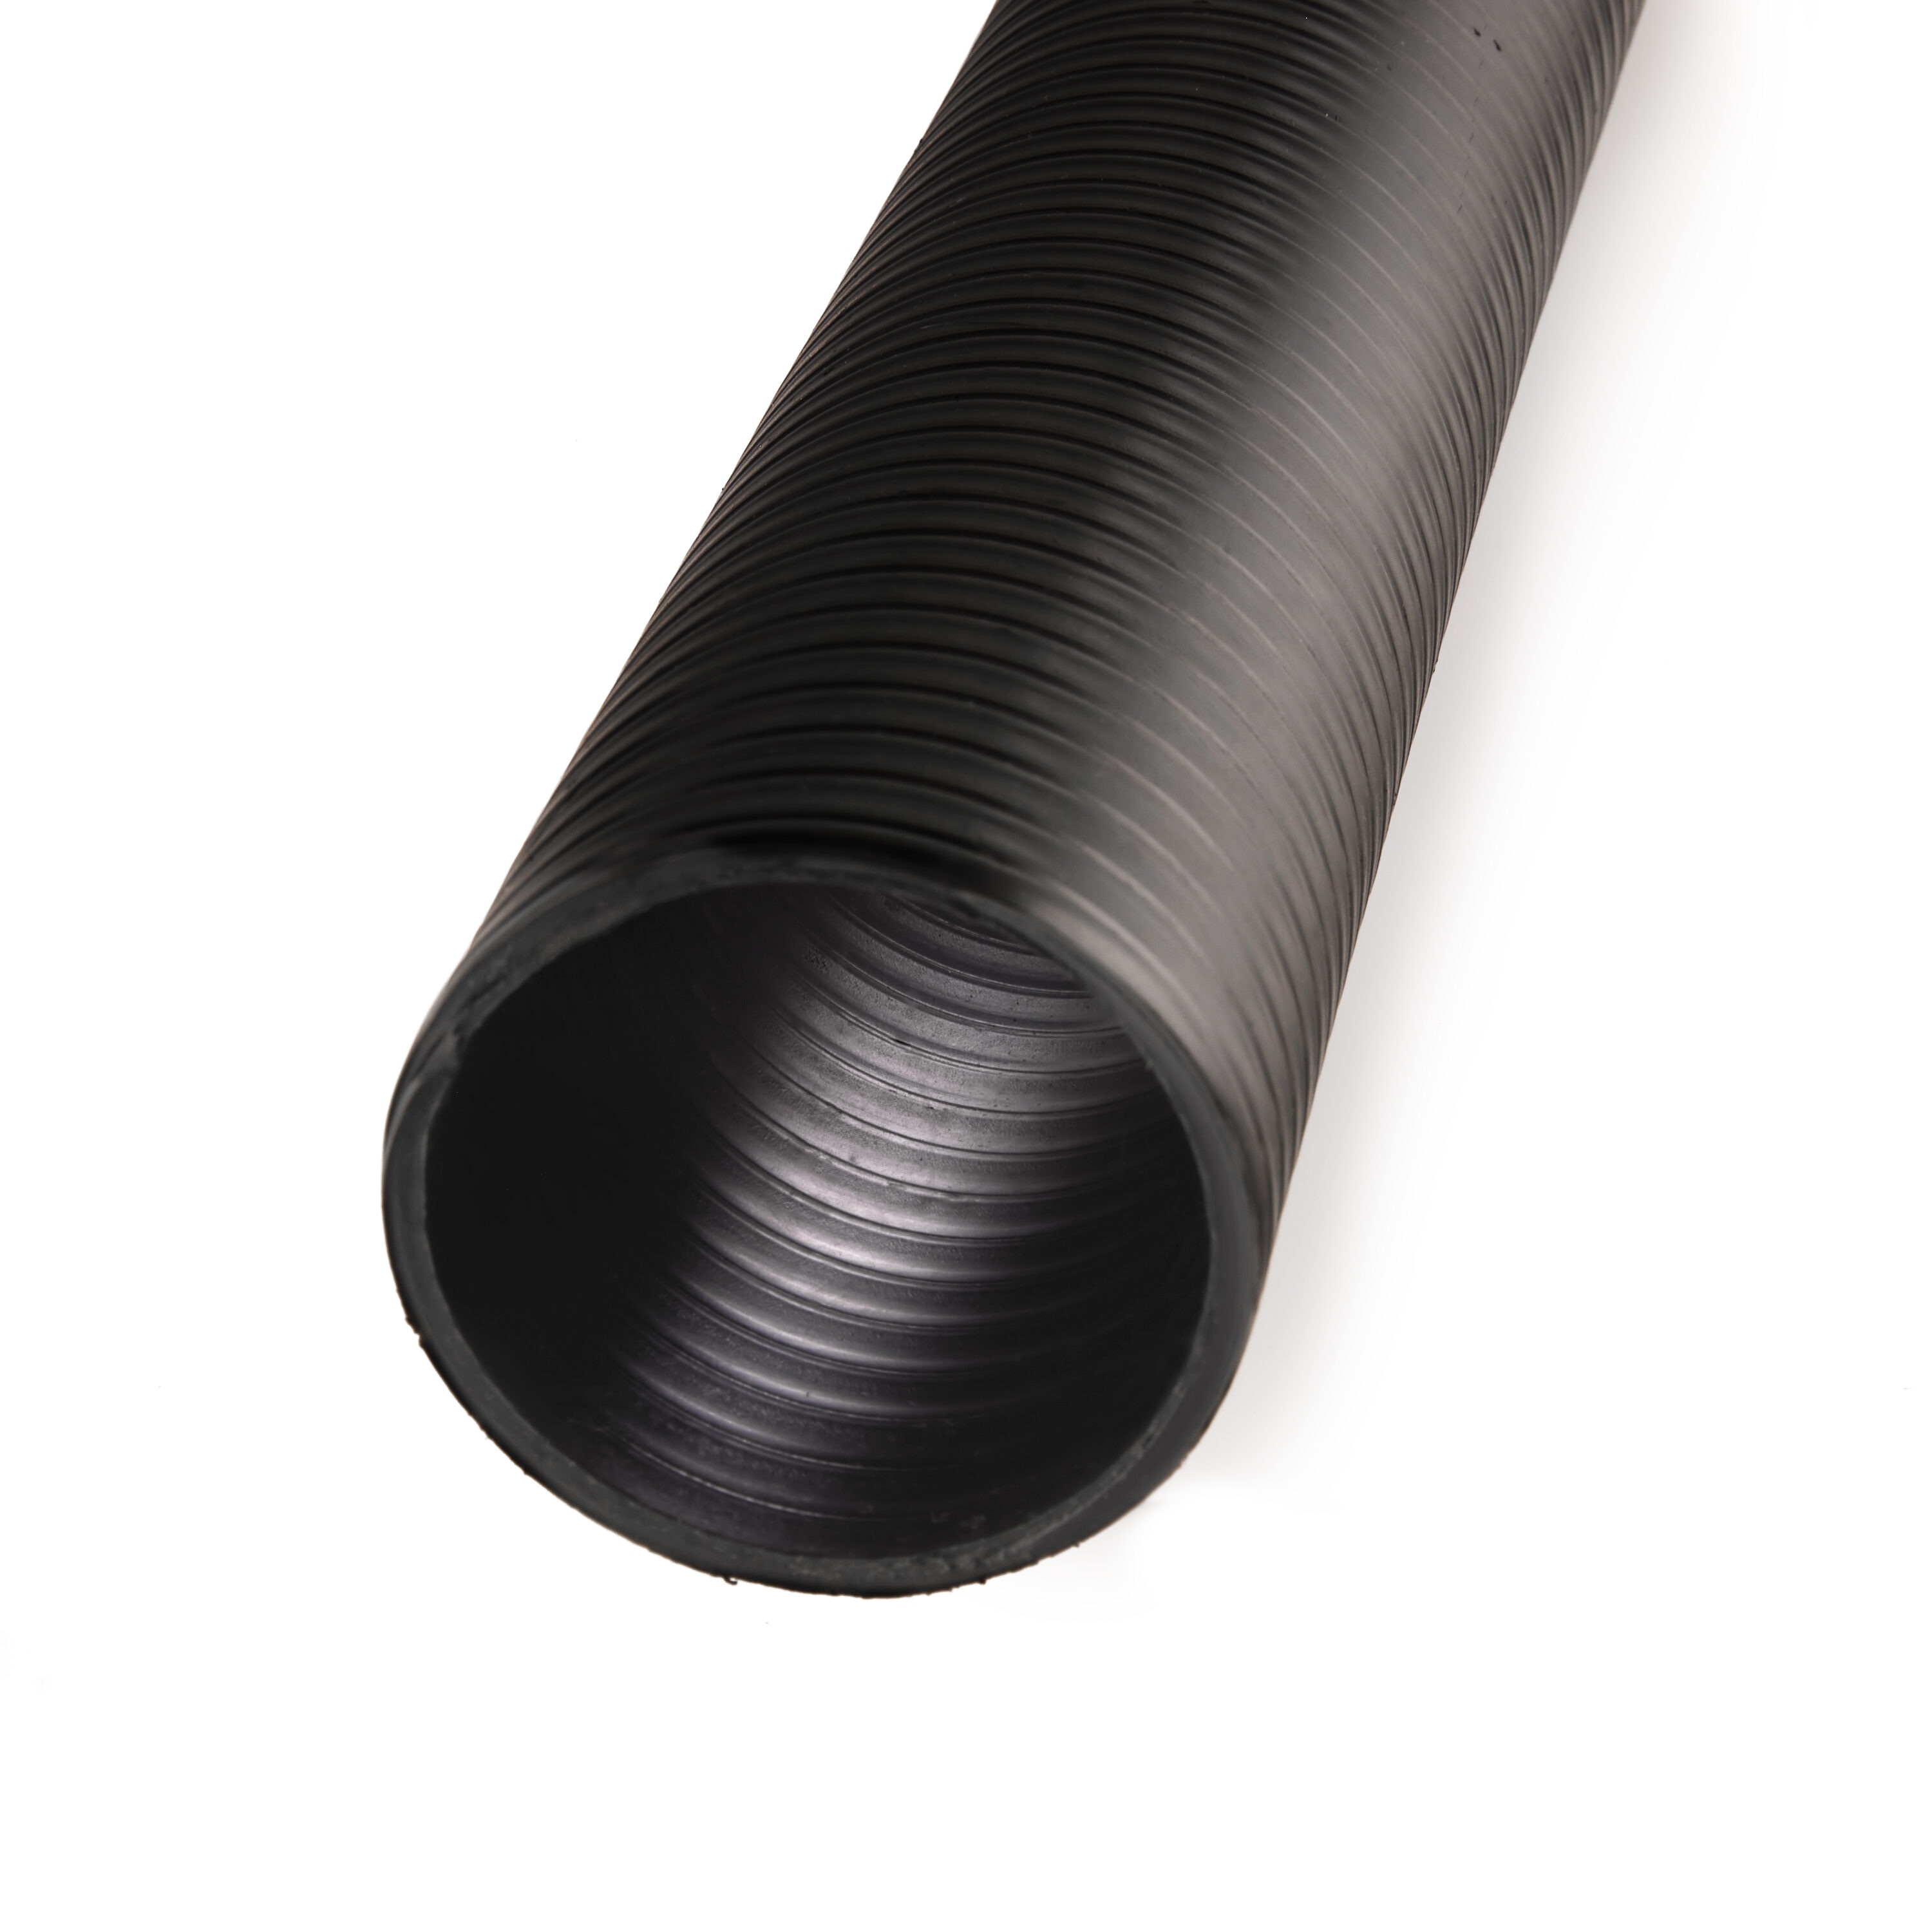 KOHINOOR PVC 50 mm BLACK Flexible Pipe - HEAVY DUTY at Rs 390/roll